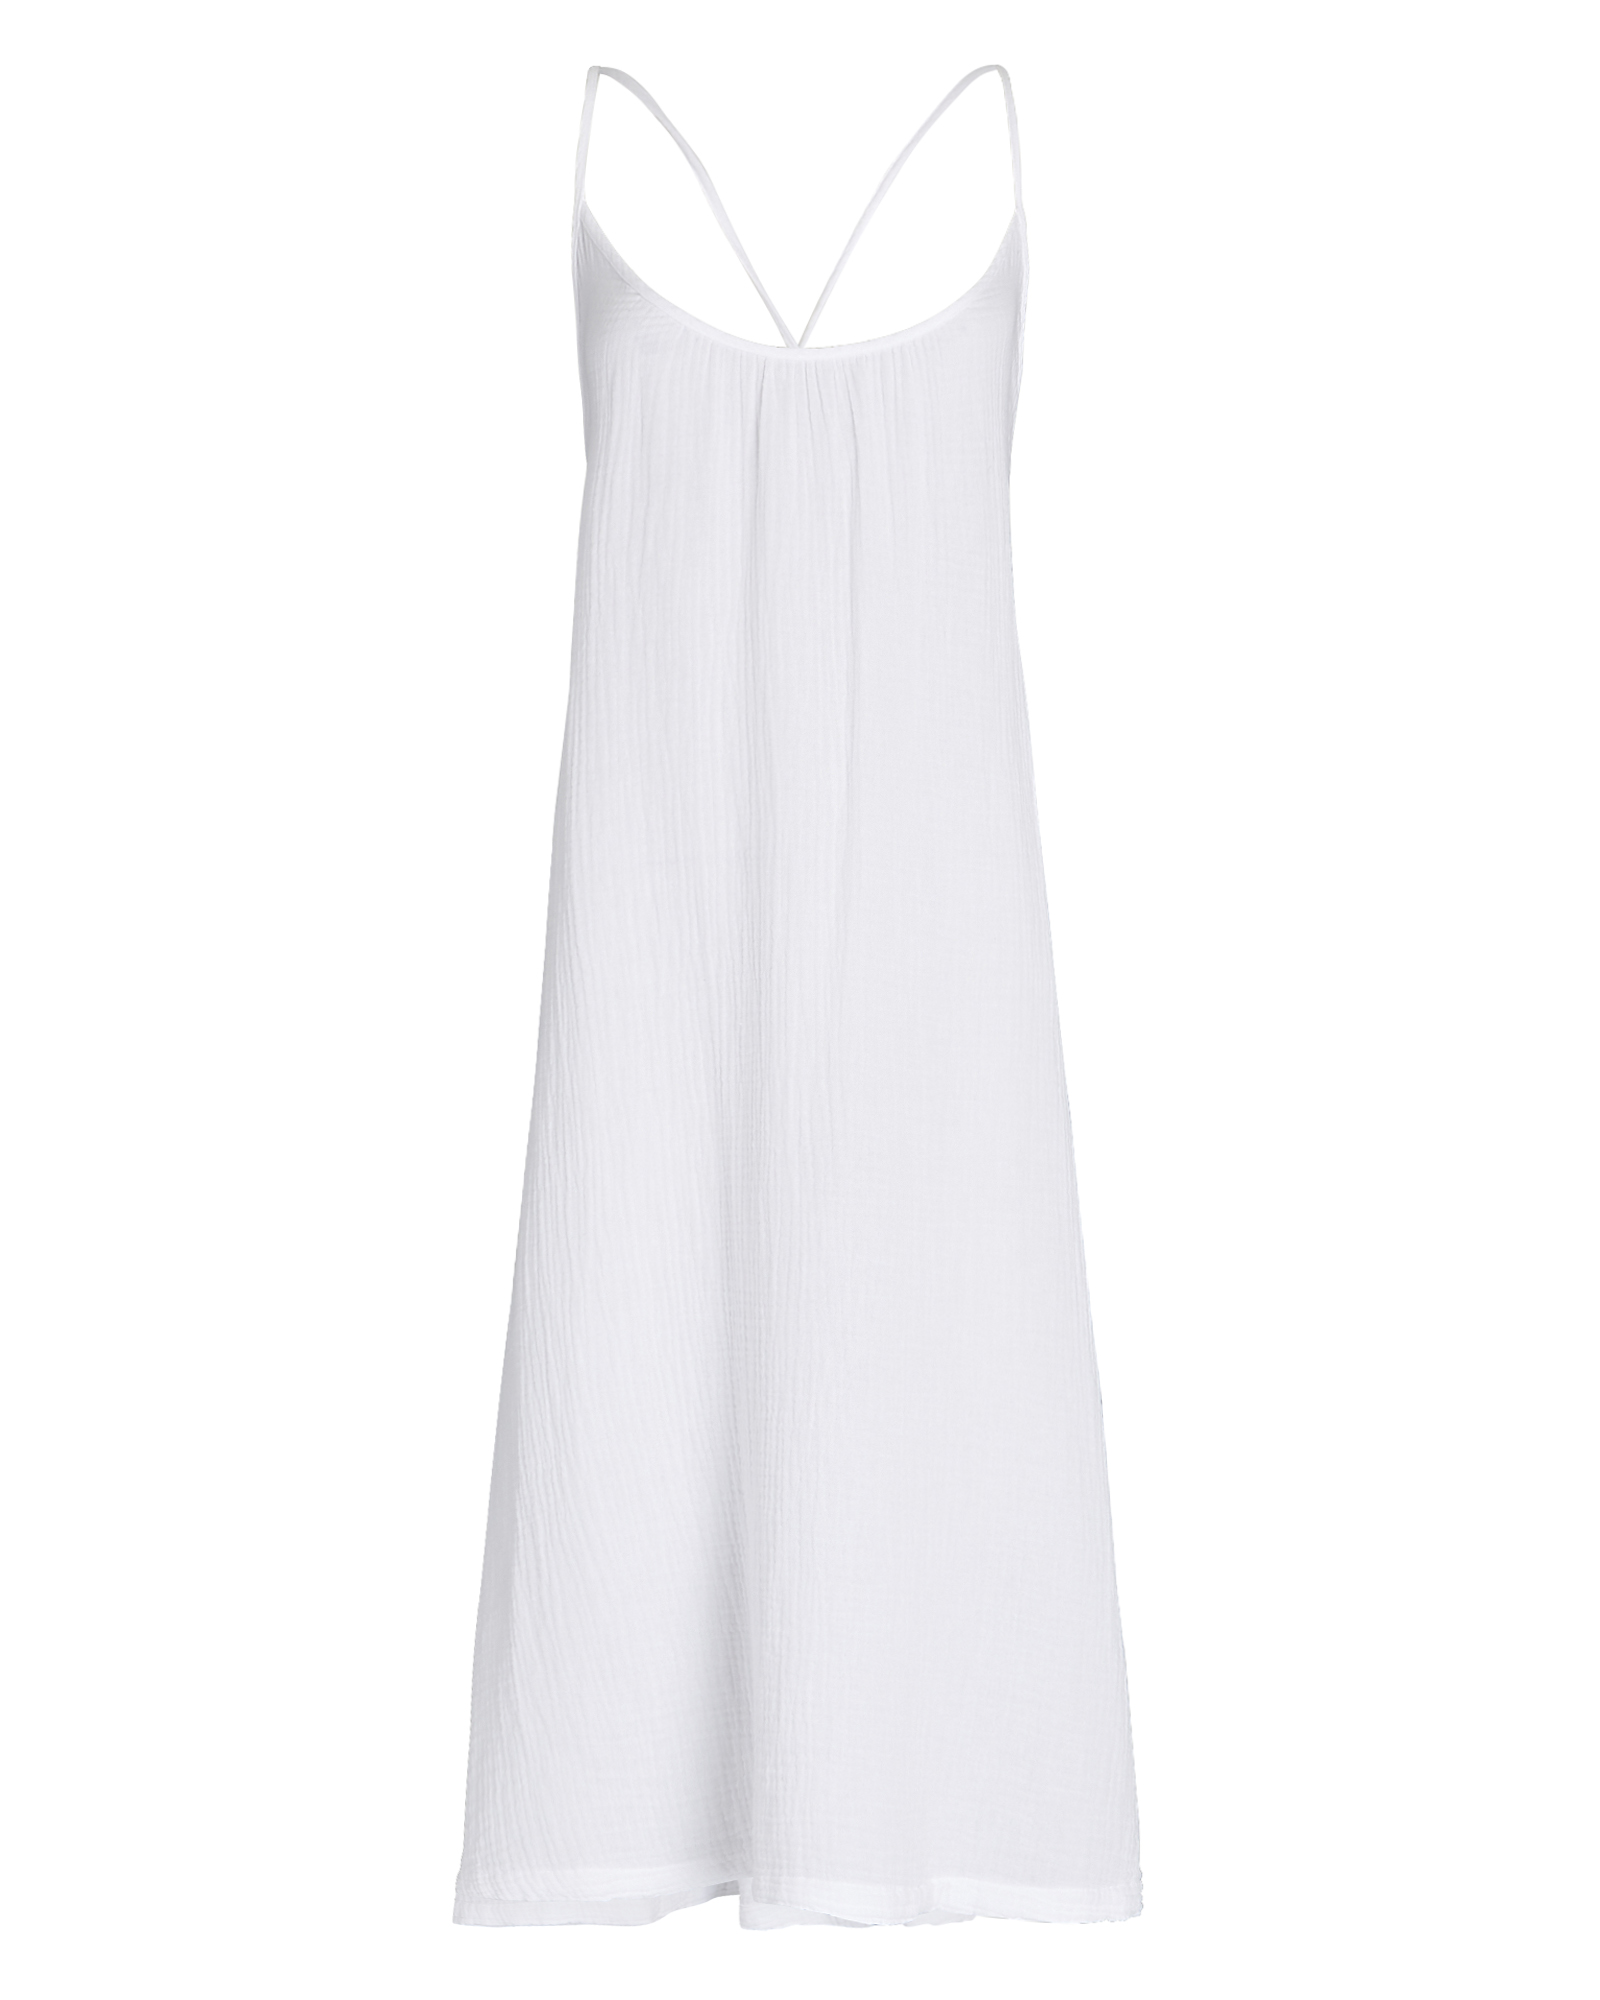 Honorine Simone Tie-Back Midi Dress In White | INTERMIX®